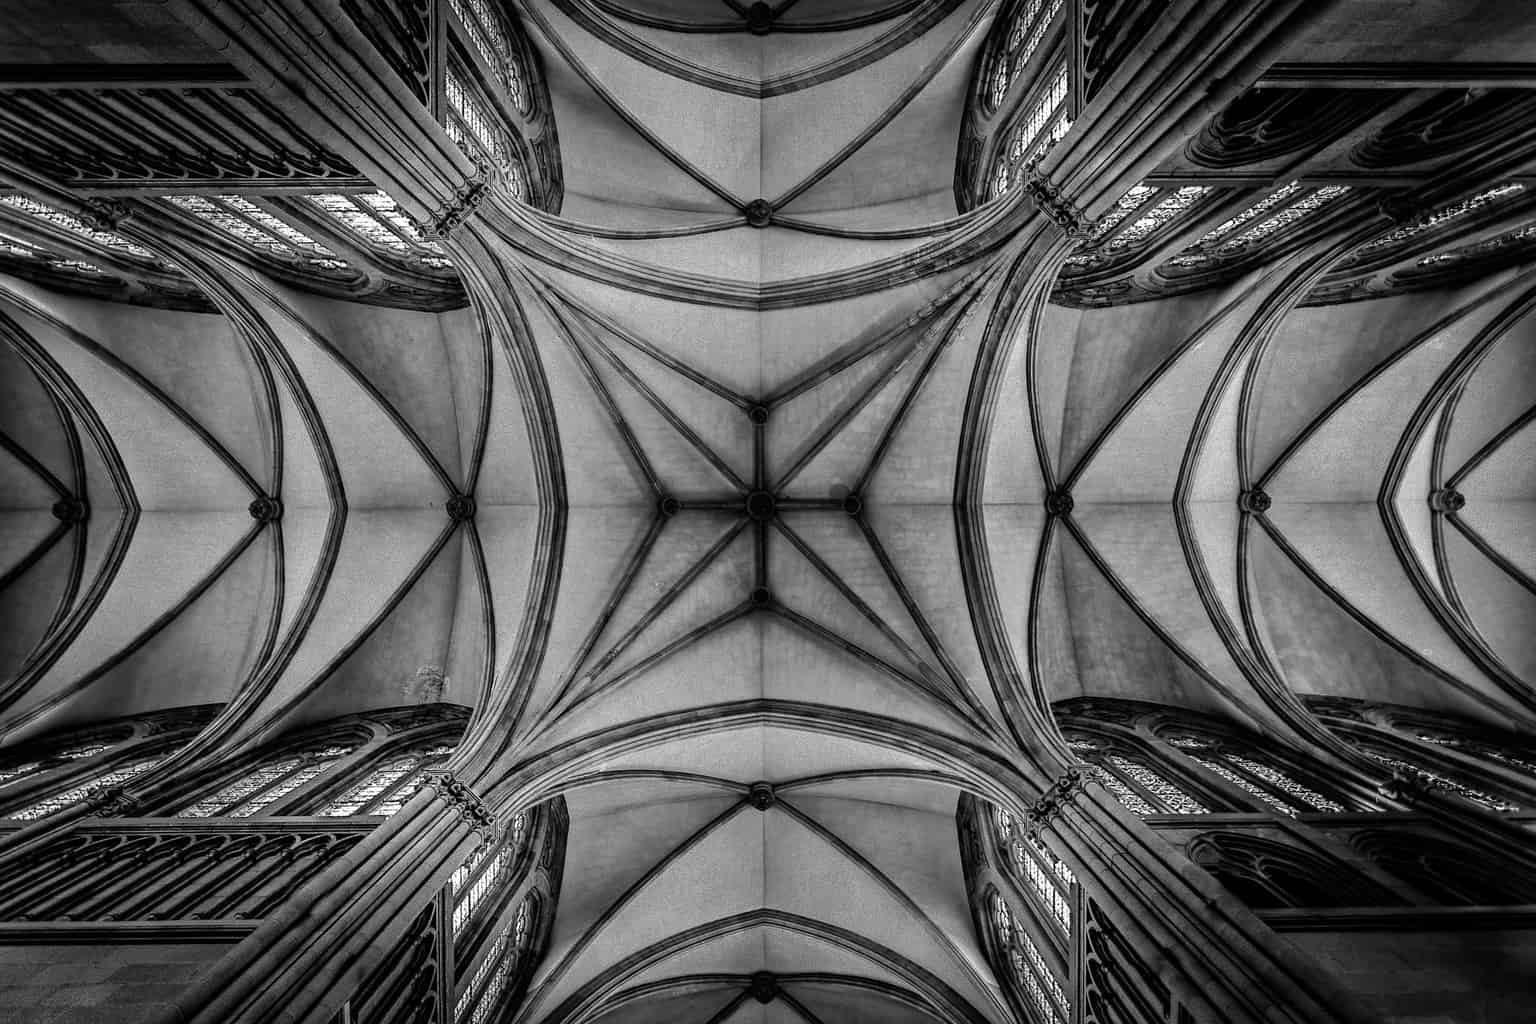  San Sebastian Cathedral, Spain.  